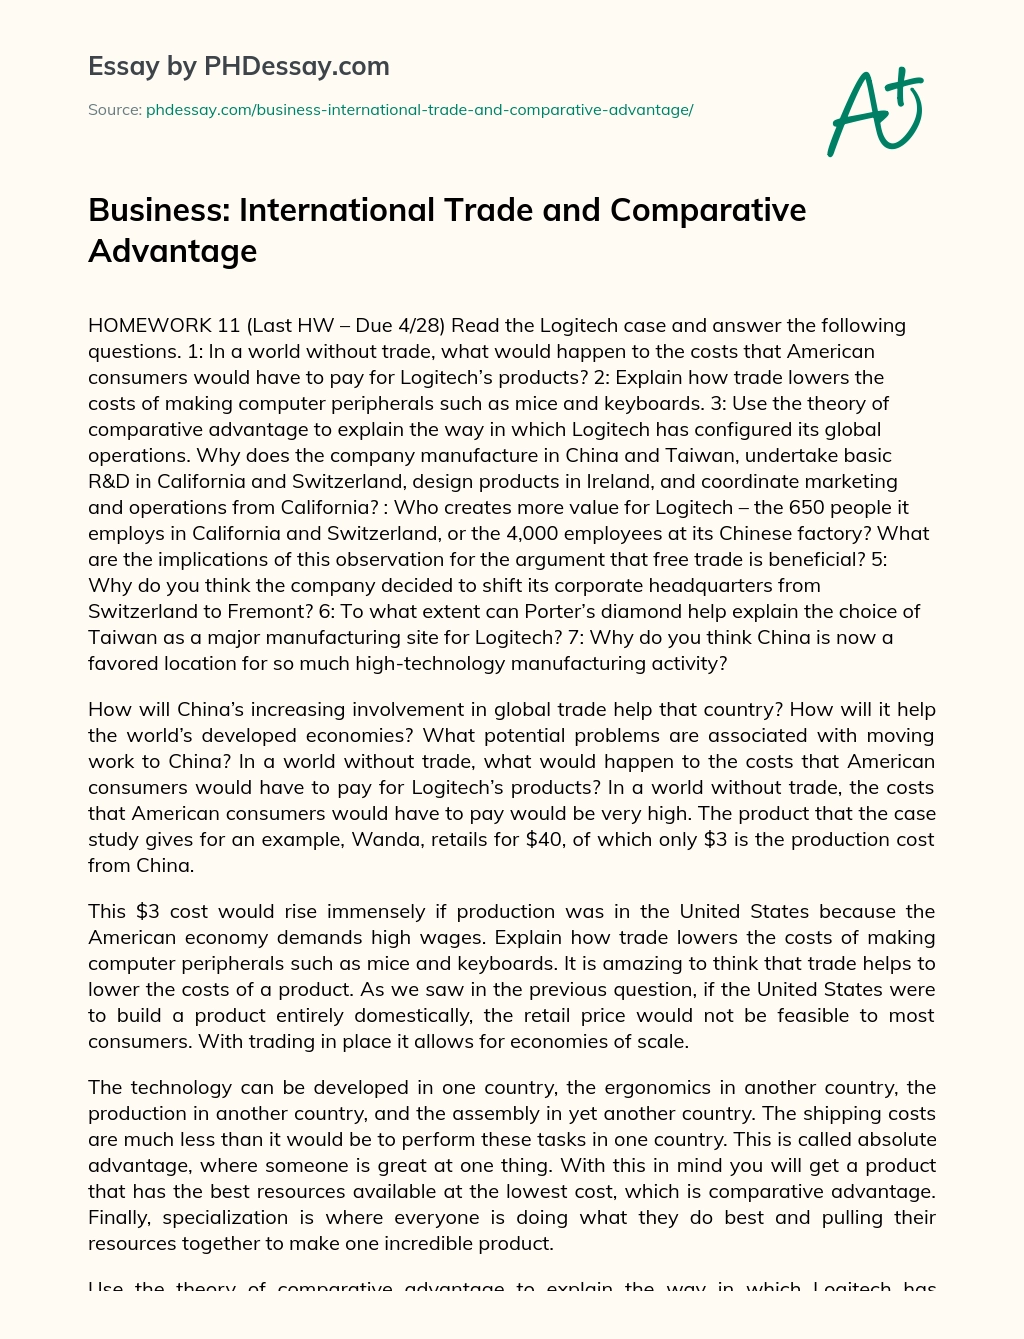 Business: International Trade and Comparative Advantage essay